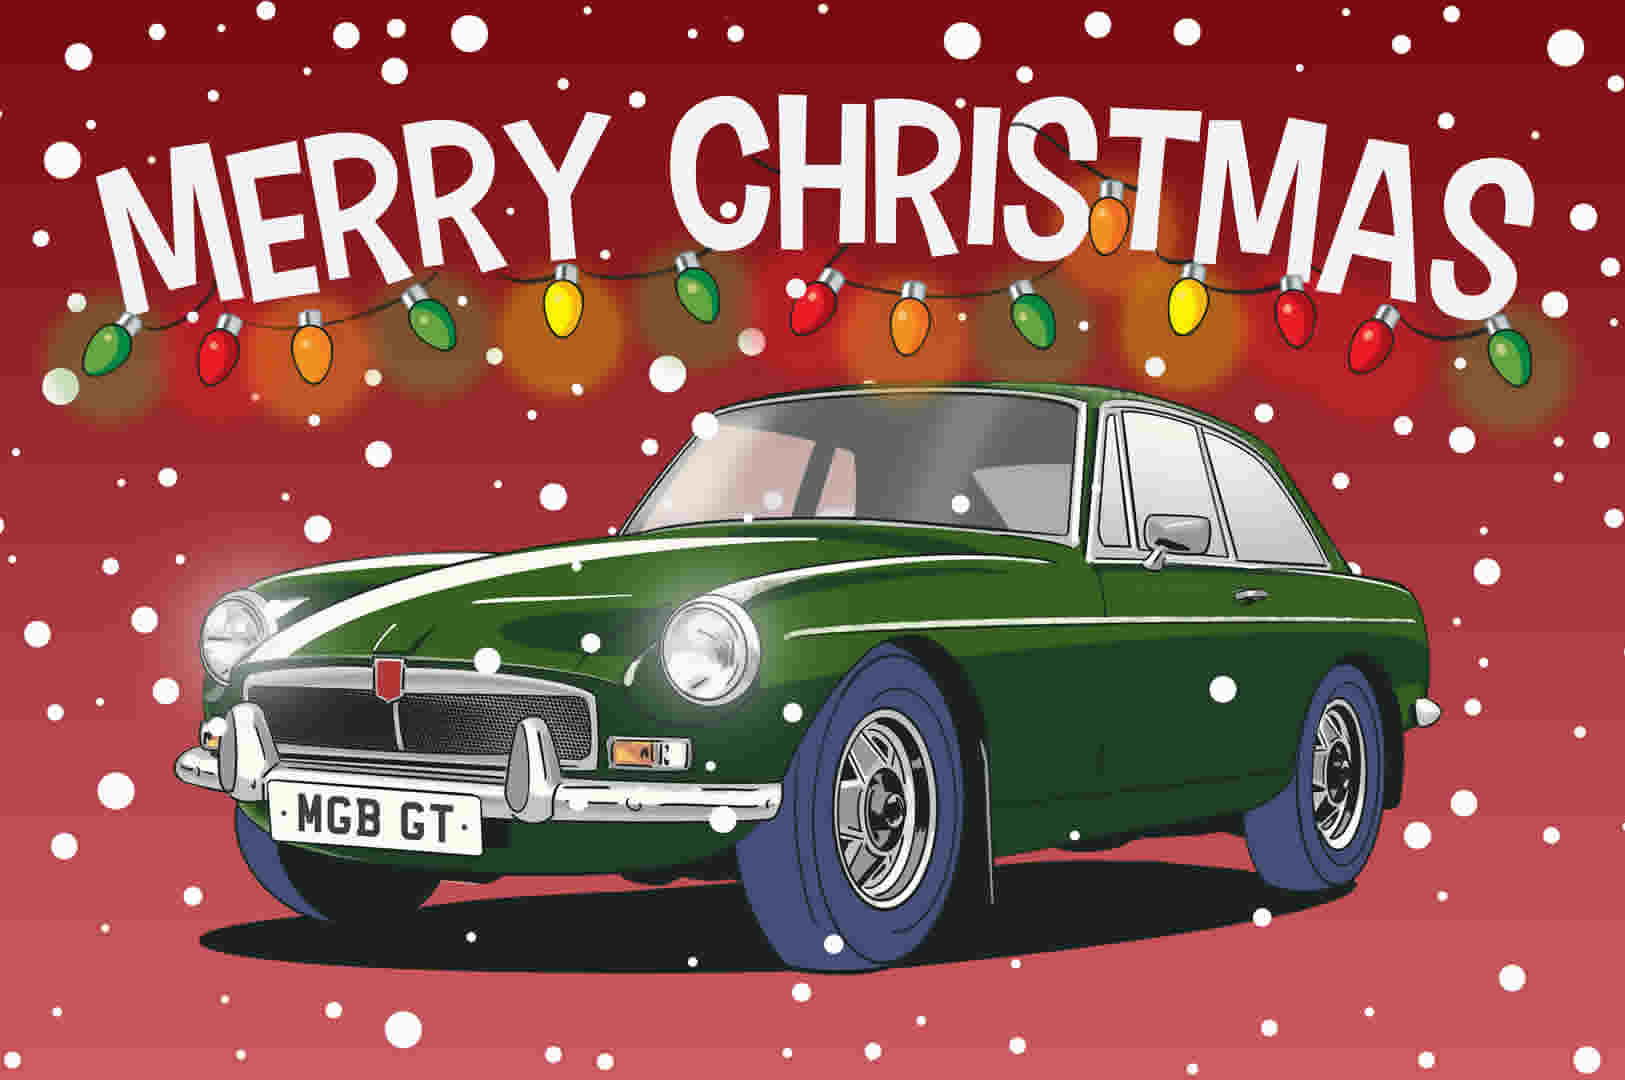 MGB car Christmas Card